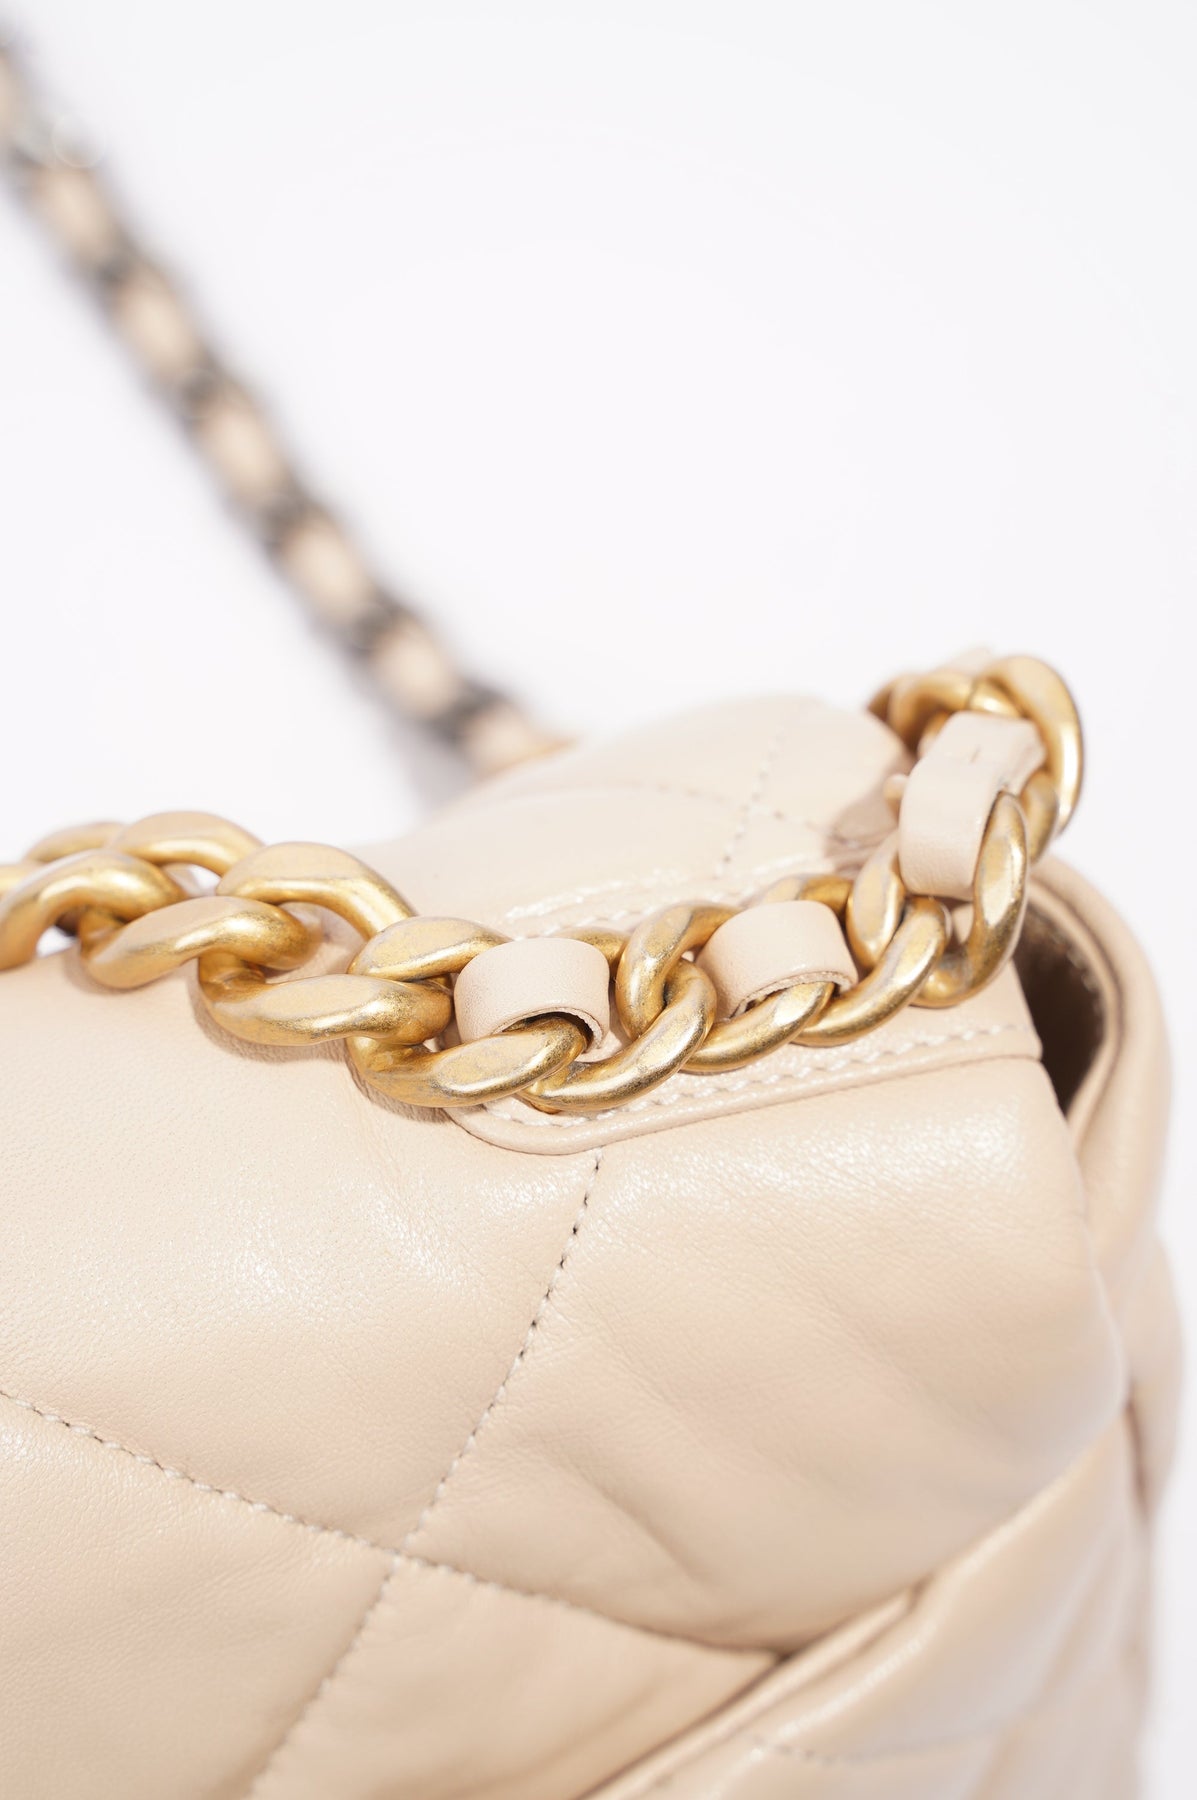 Chanel 19 leather handbag Chanel Black in Leather - 25087183